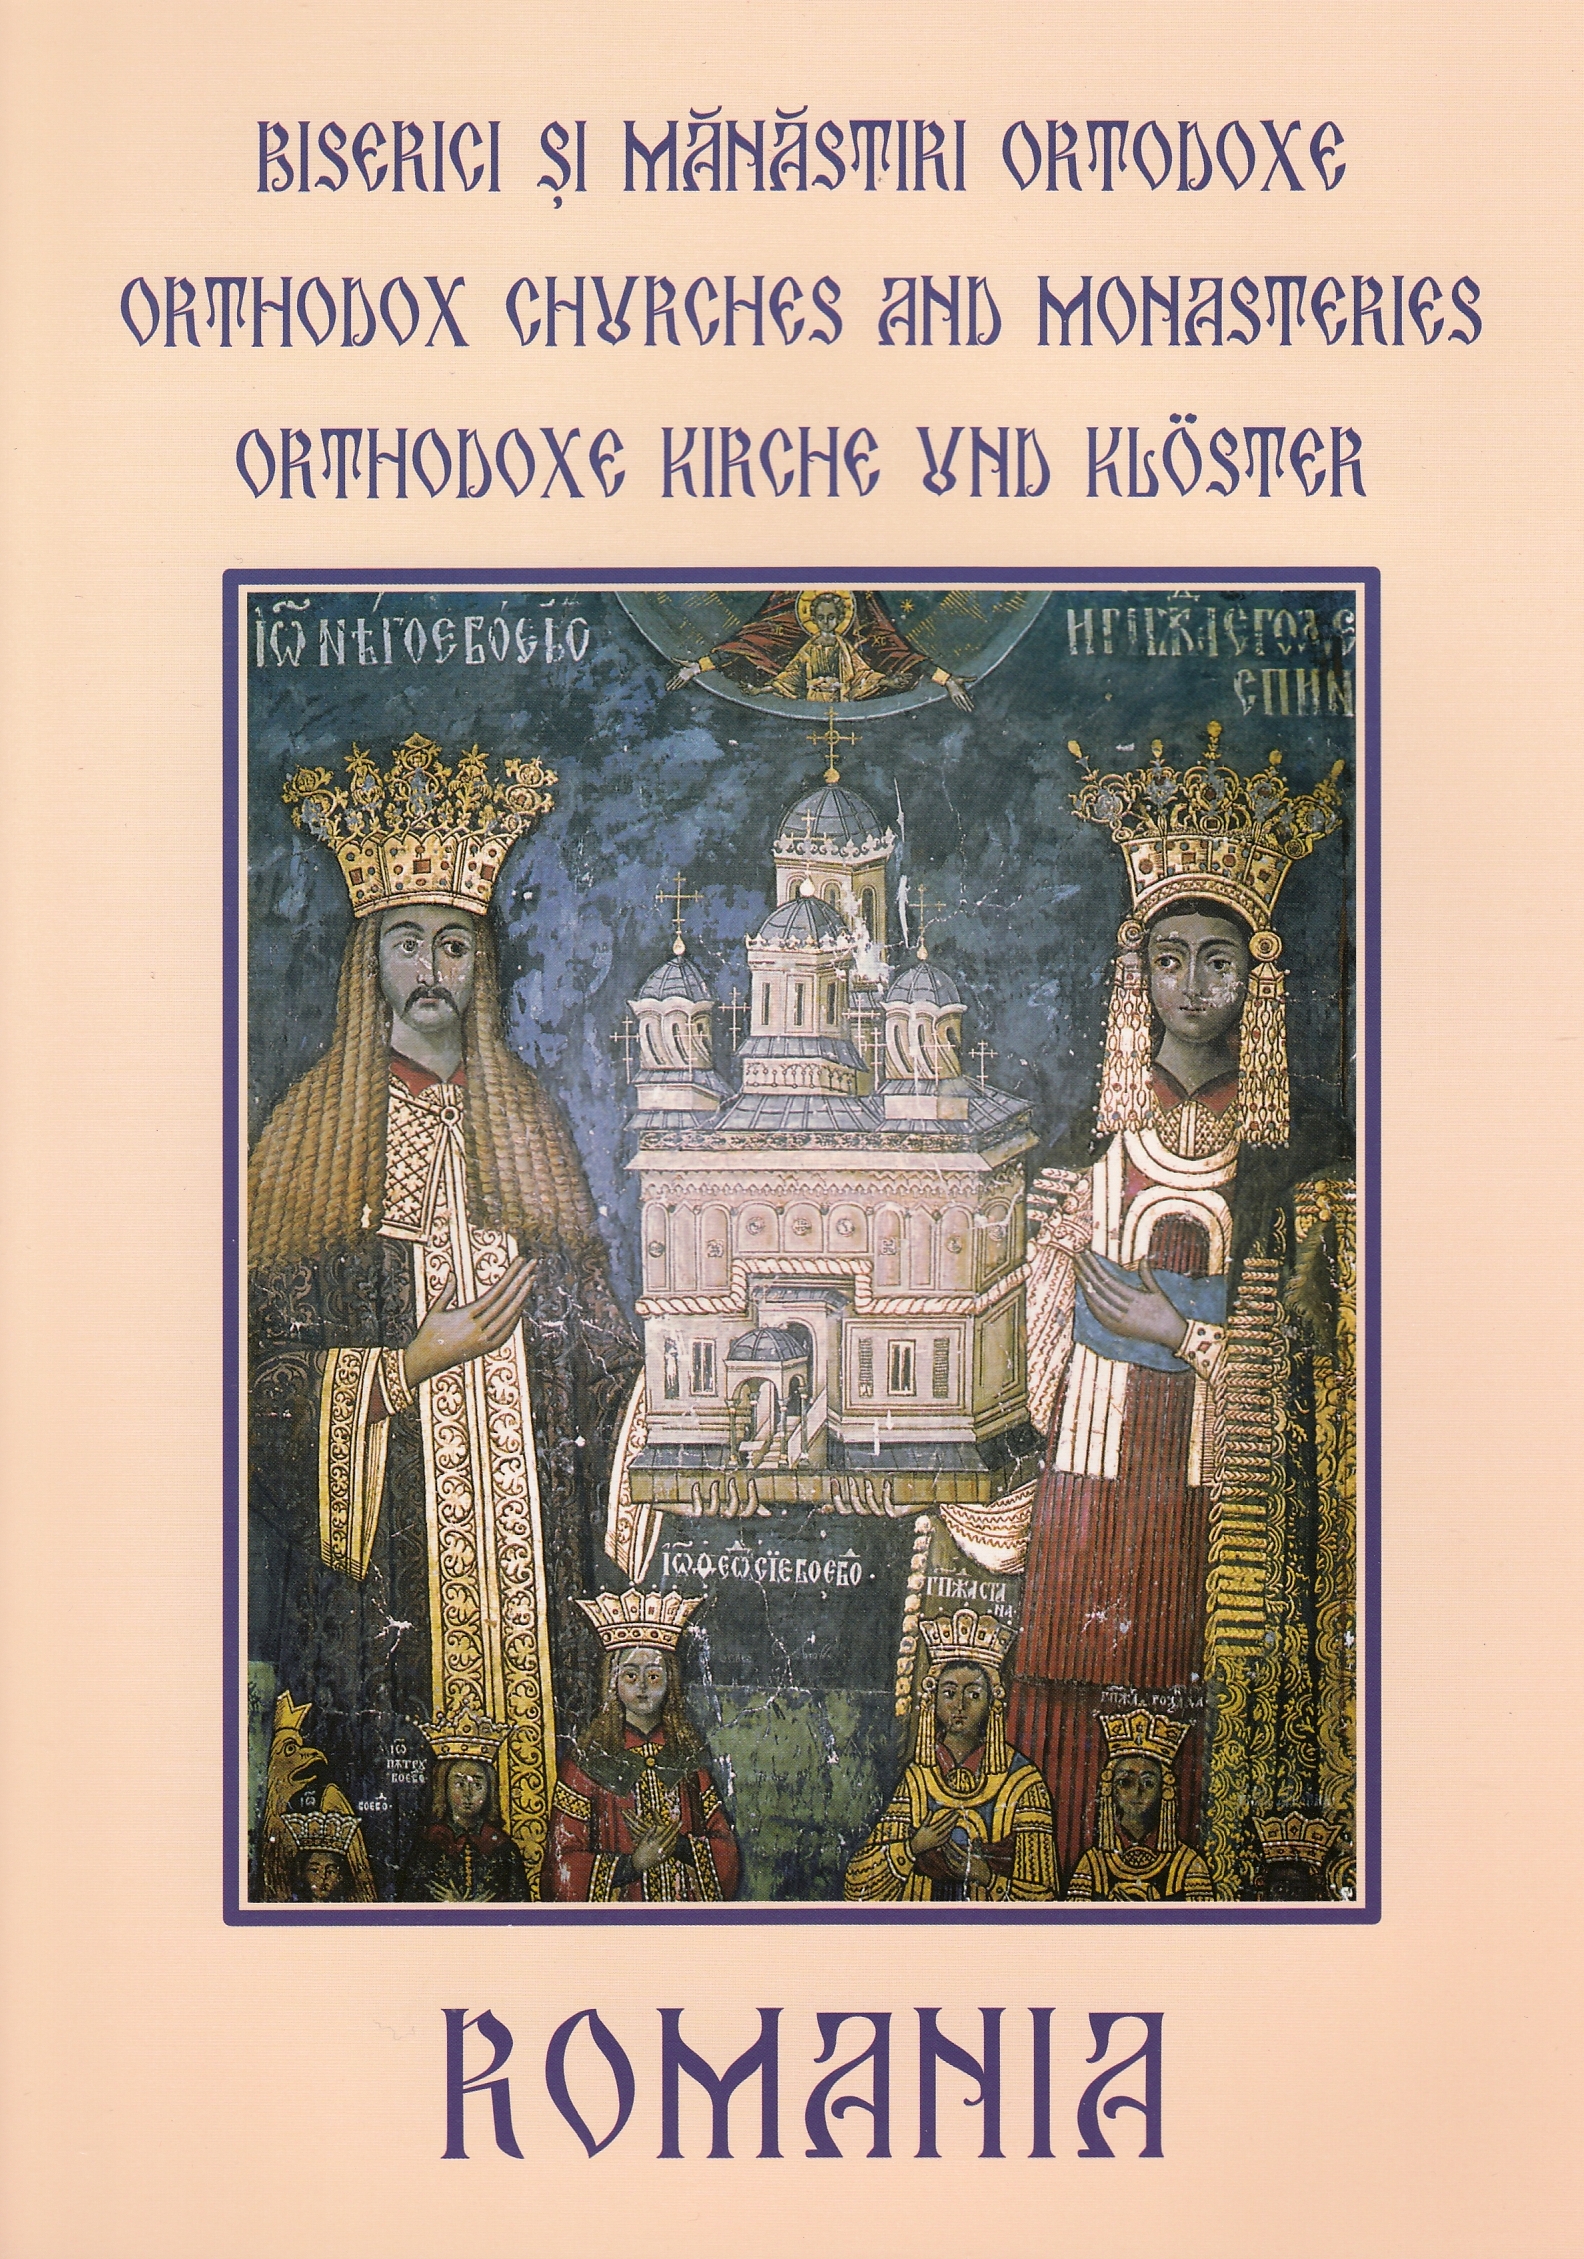 Romania. Biserici si manastiri ortodoxe. Orthodox Churches and Monasteries (ro-en-germ) | Alcor poza bestsellers.ro